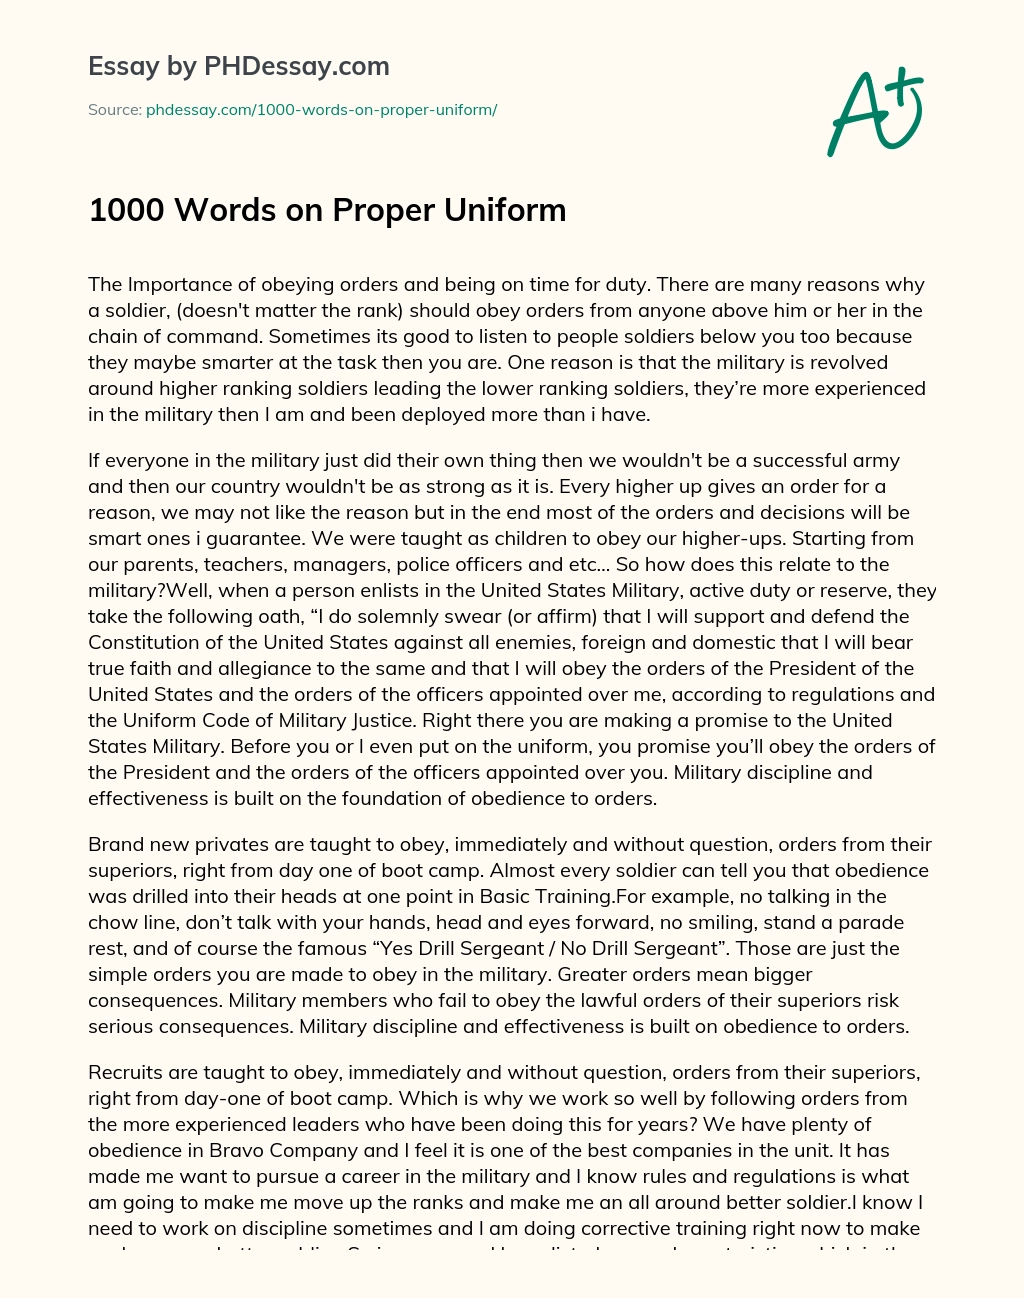 1000 Words on Proper Uniform essay